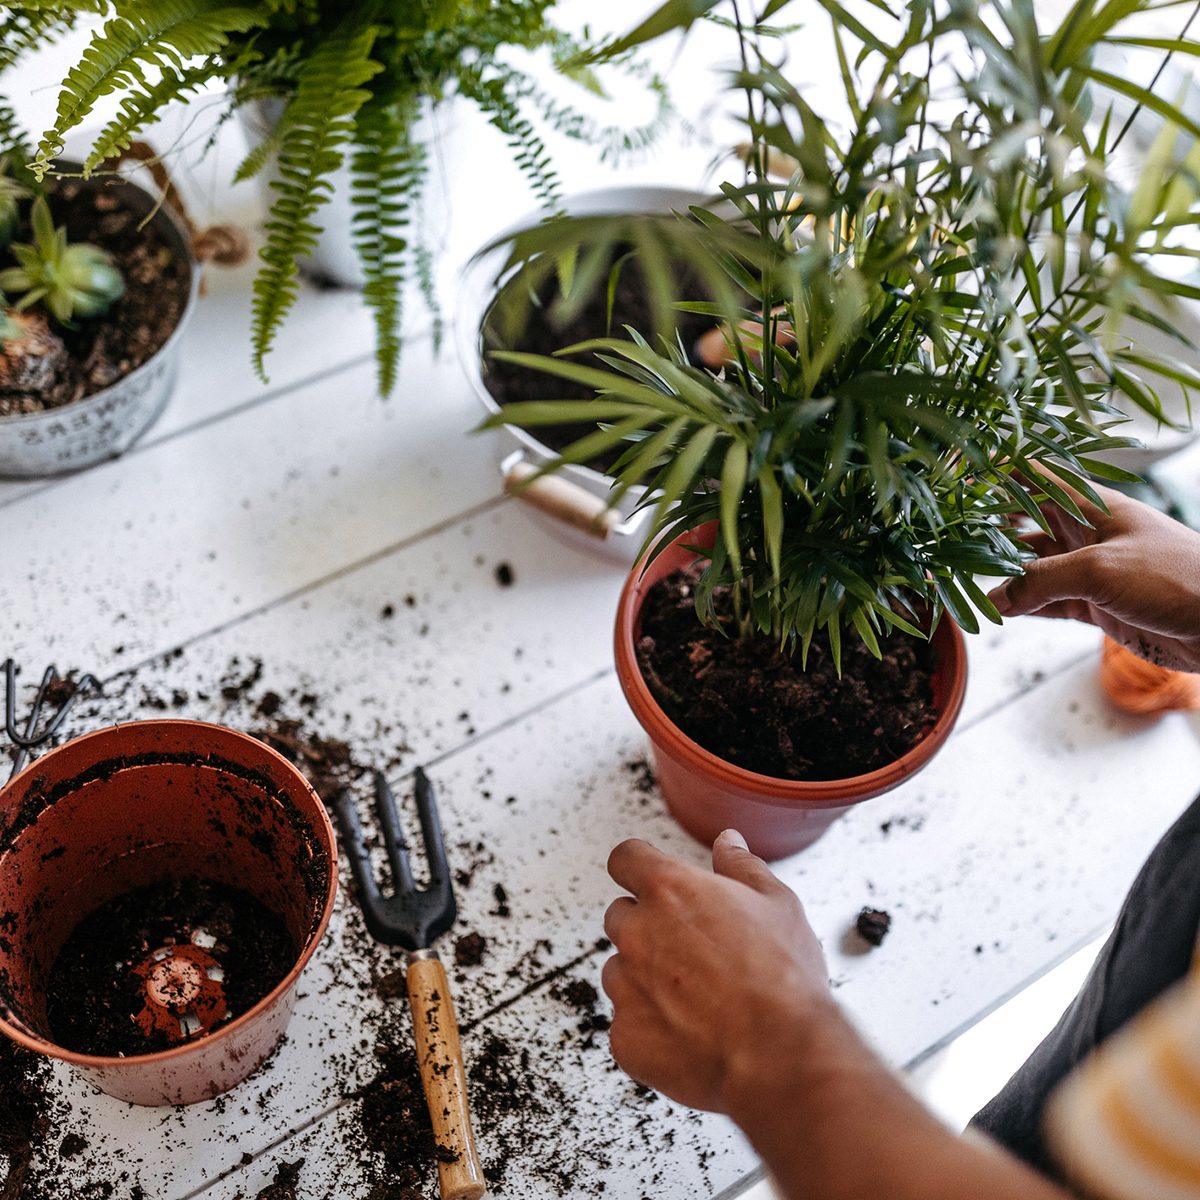 Young entrepreneur transplanting plants at flower shop, wearing apron, using gardening tools